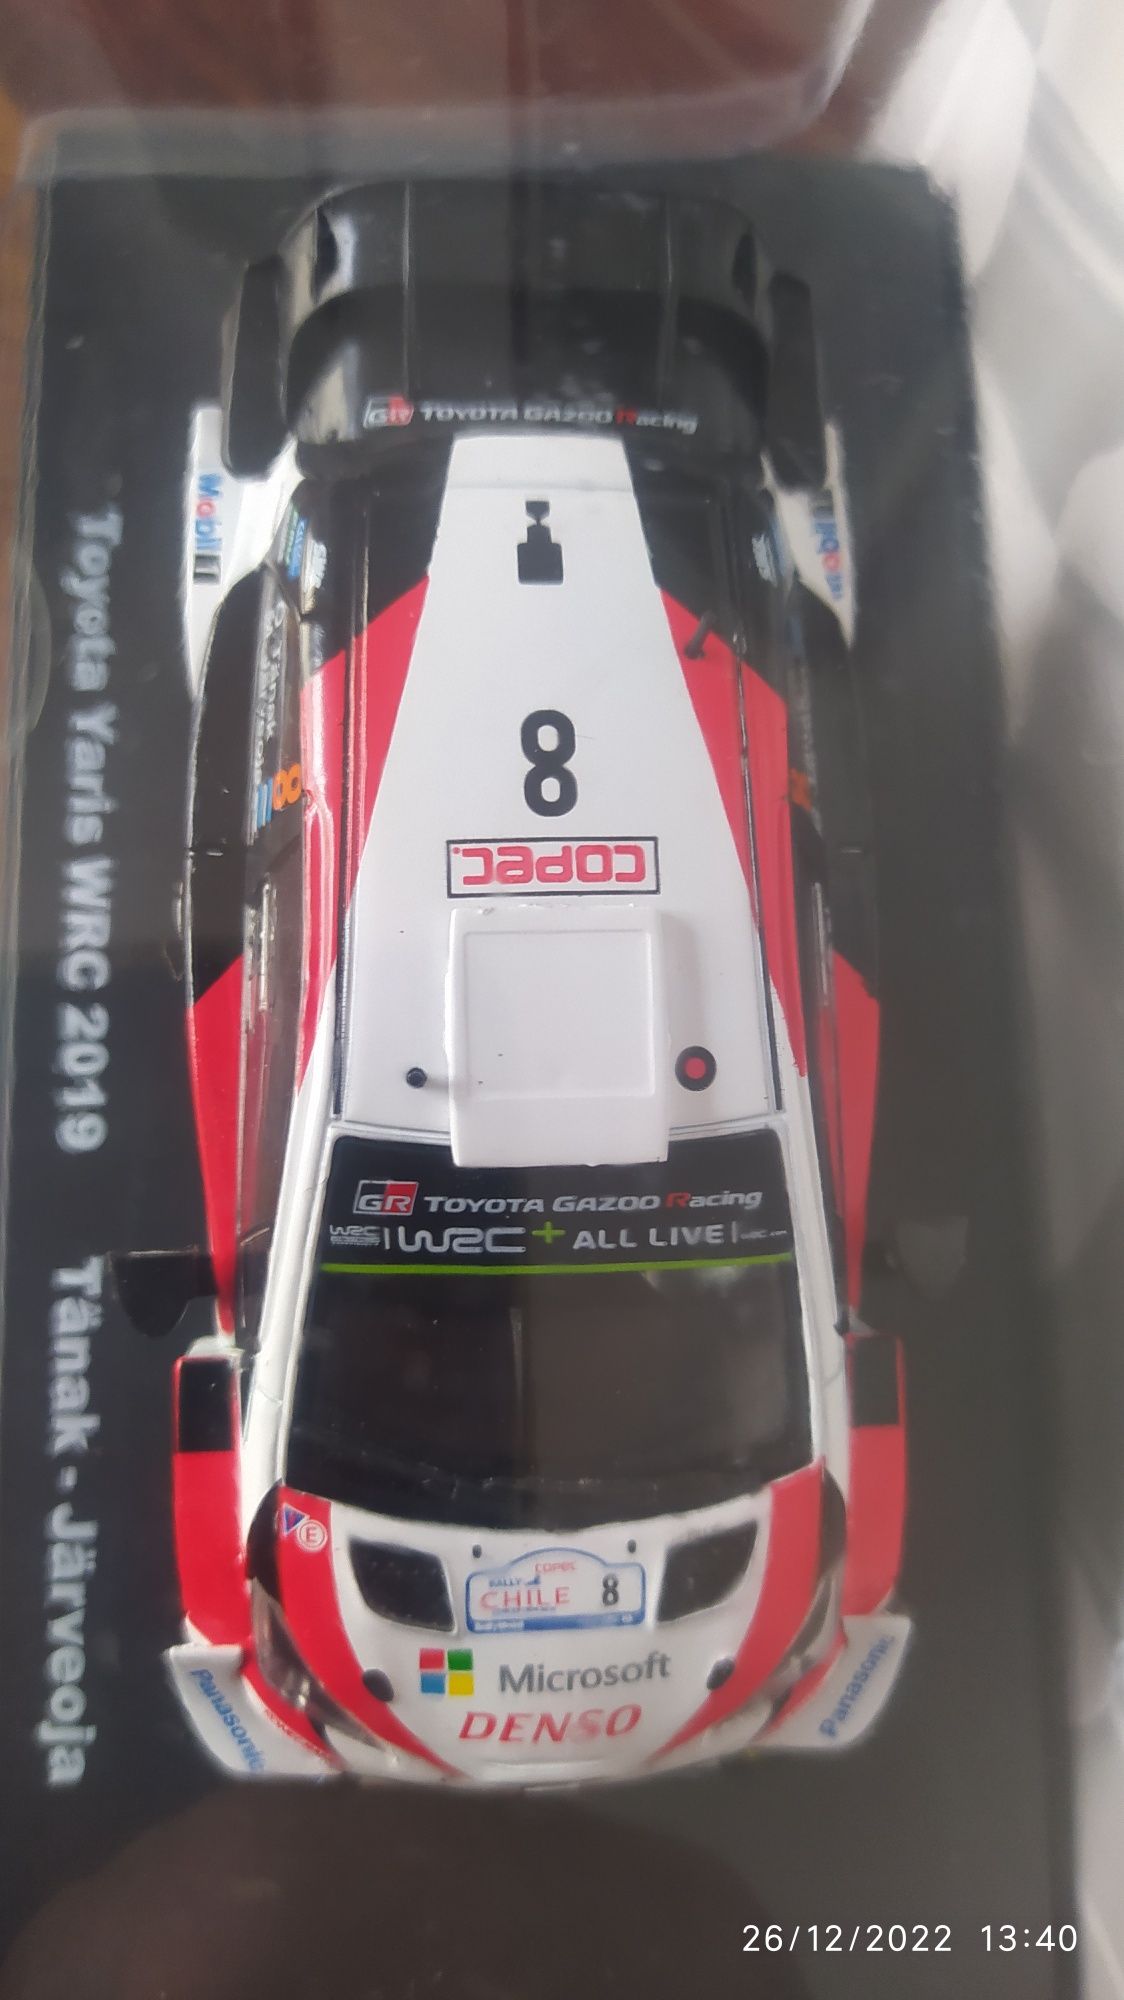 Toyota Yaris WRC 2019 Ö. Tanak